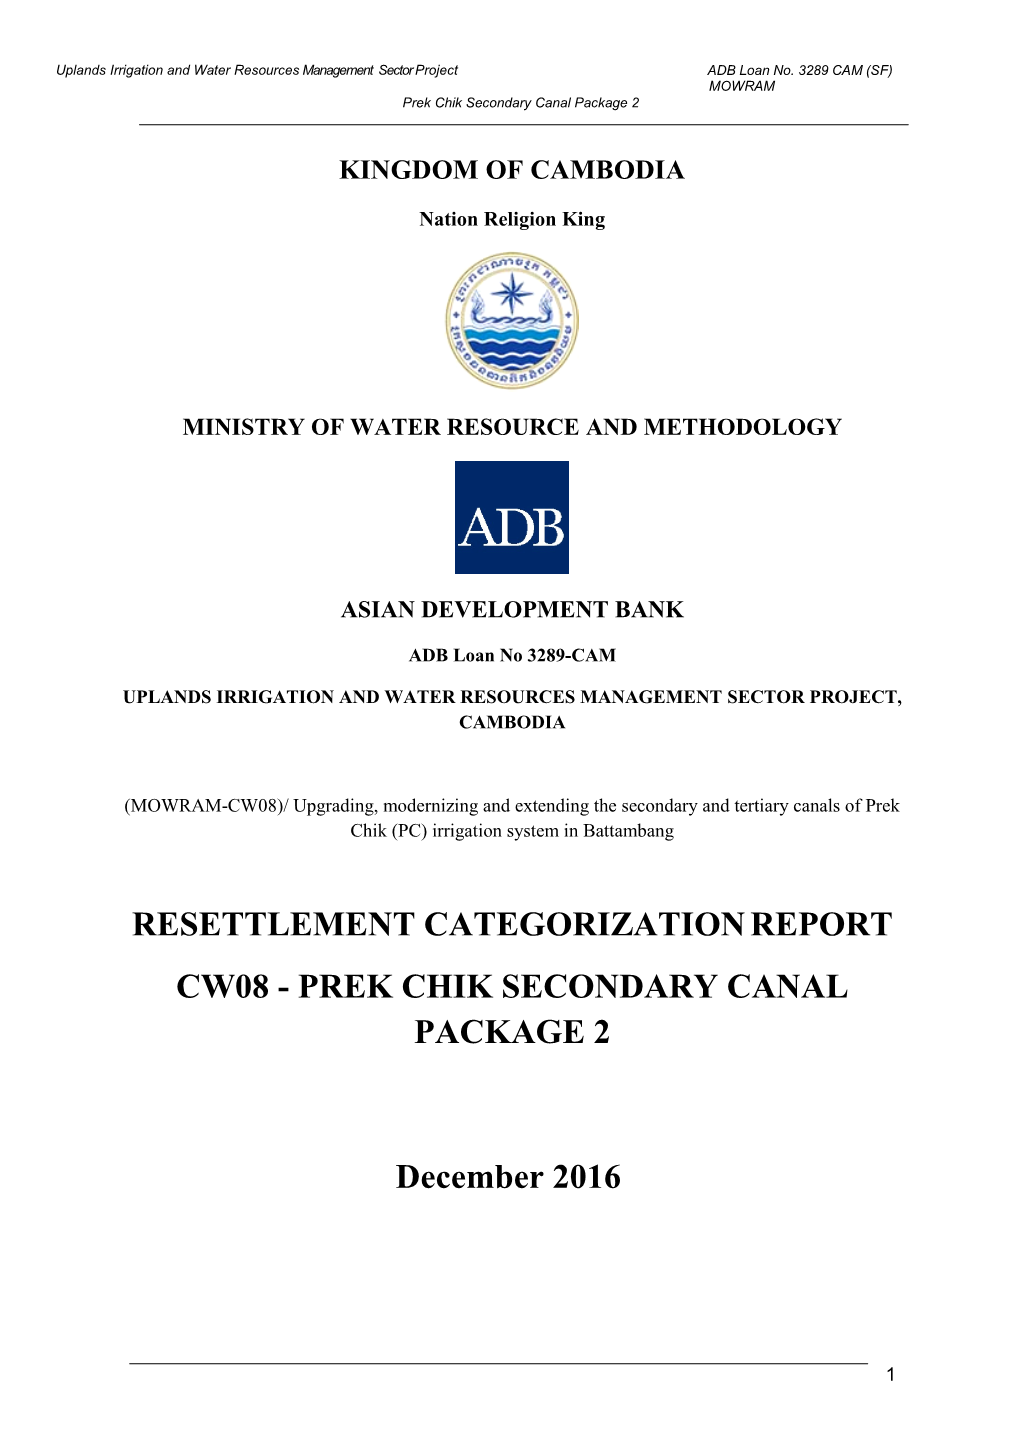 Resettlement Categorization Report (CW08)